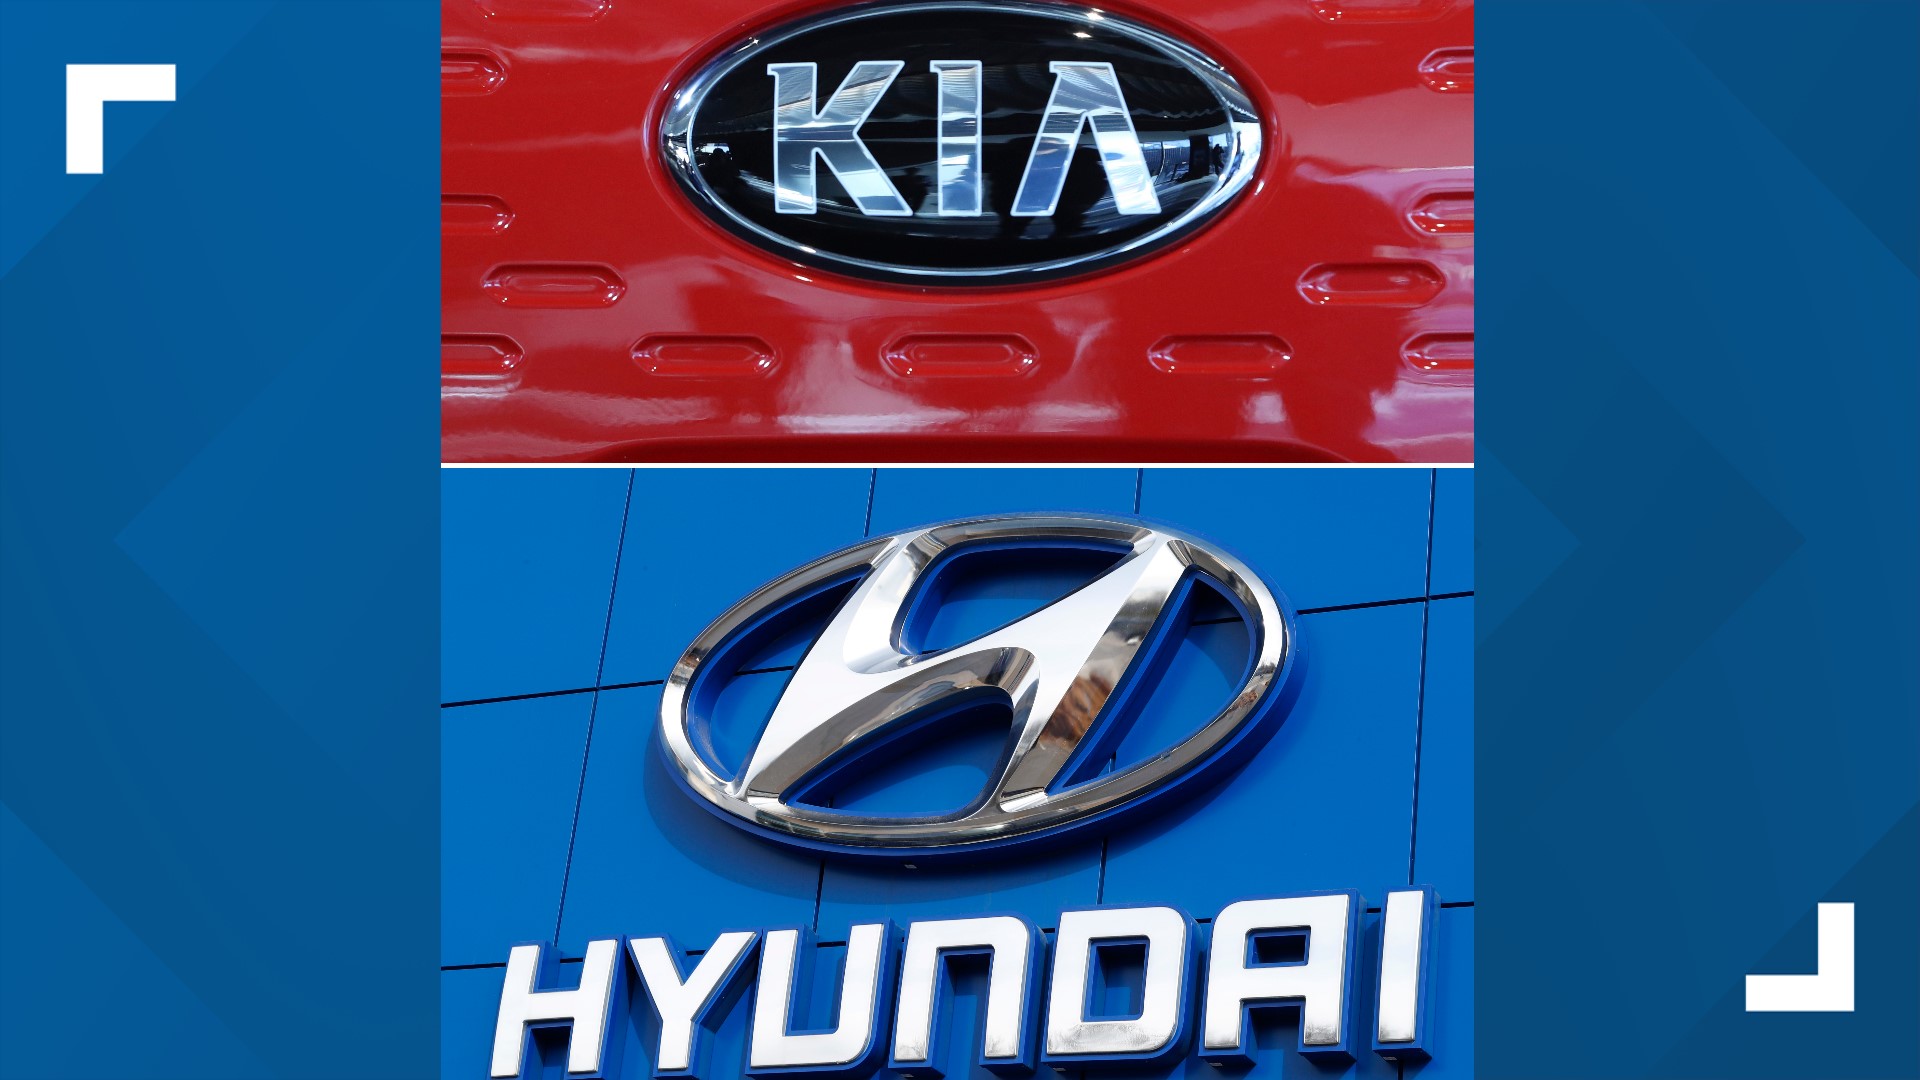 Hyundai, Kia issue recall on certain vehicles